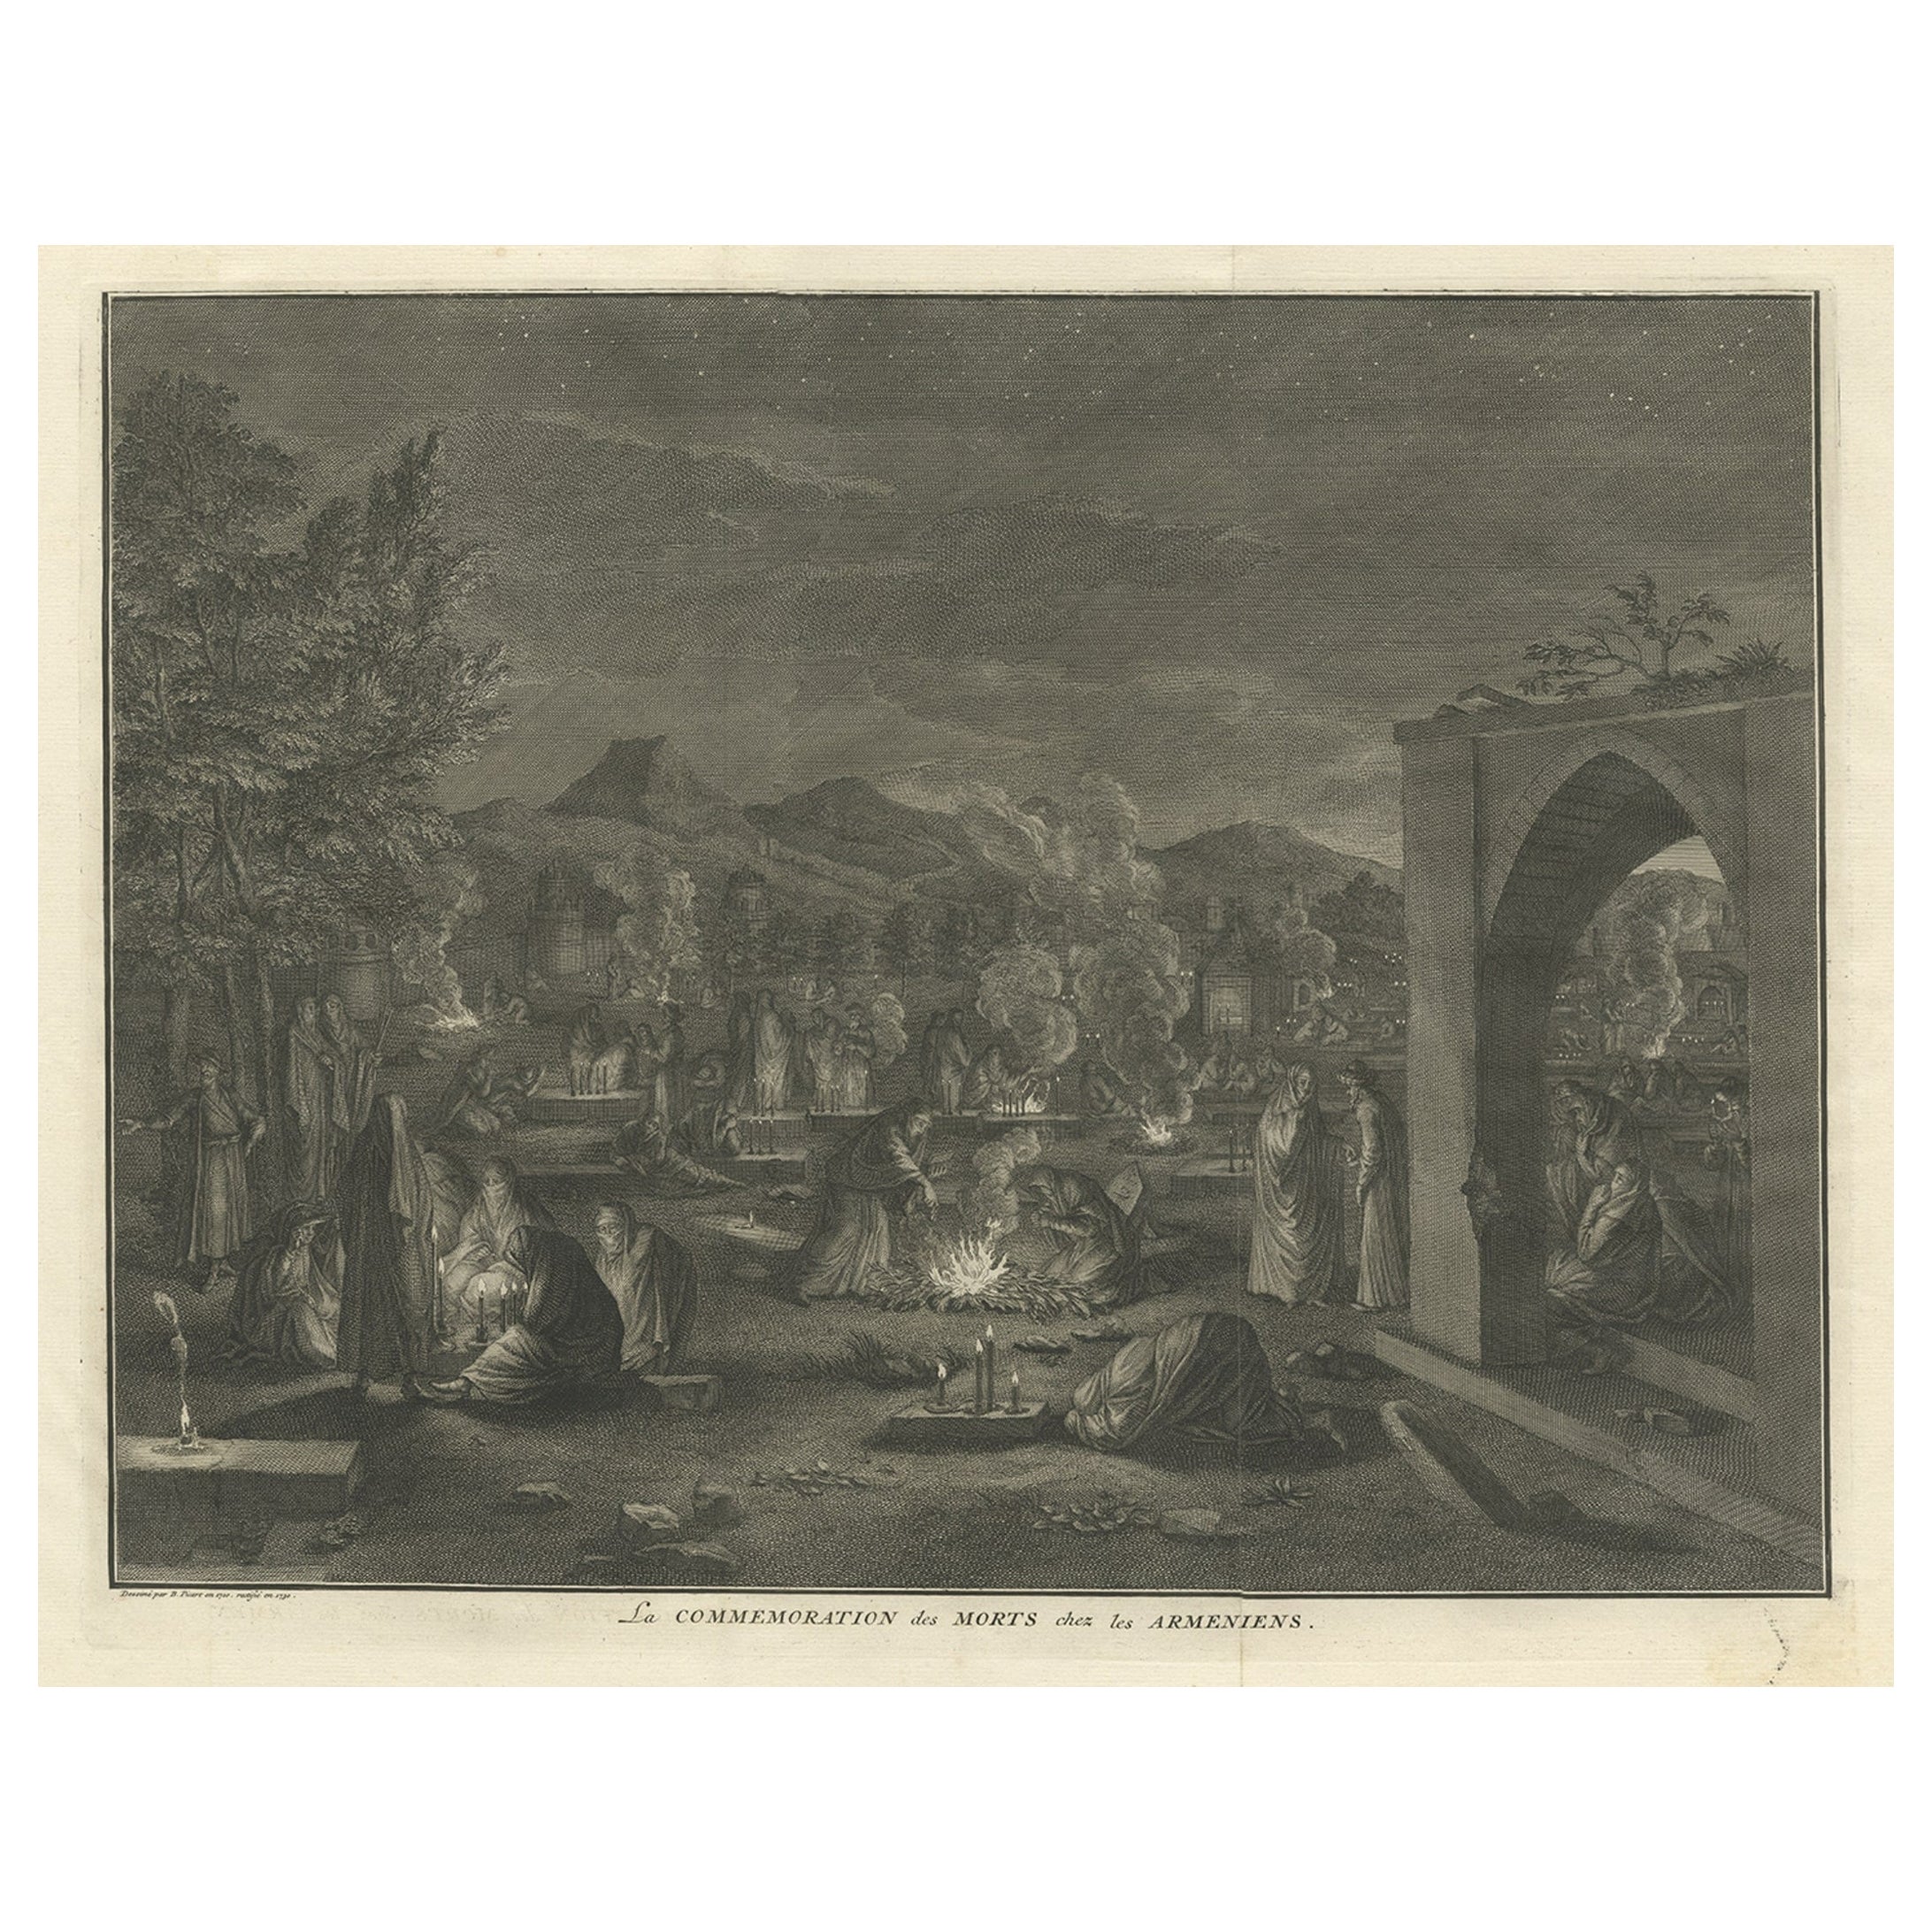 Rare Religious Antique Print Depicting the Death of Armenian Christians, 1730